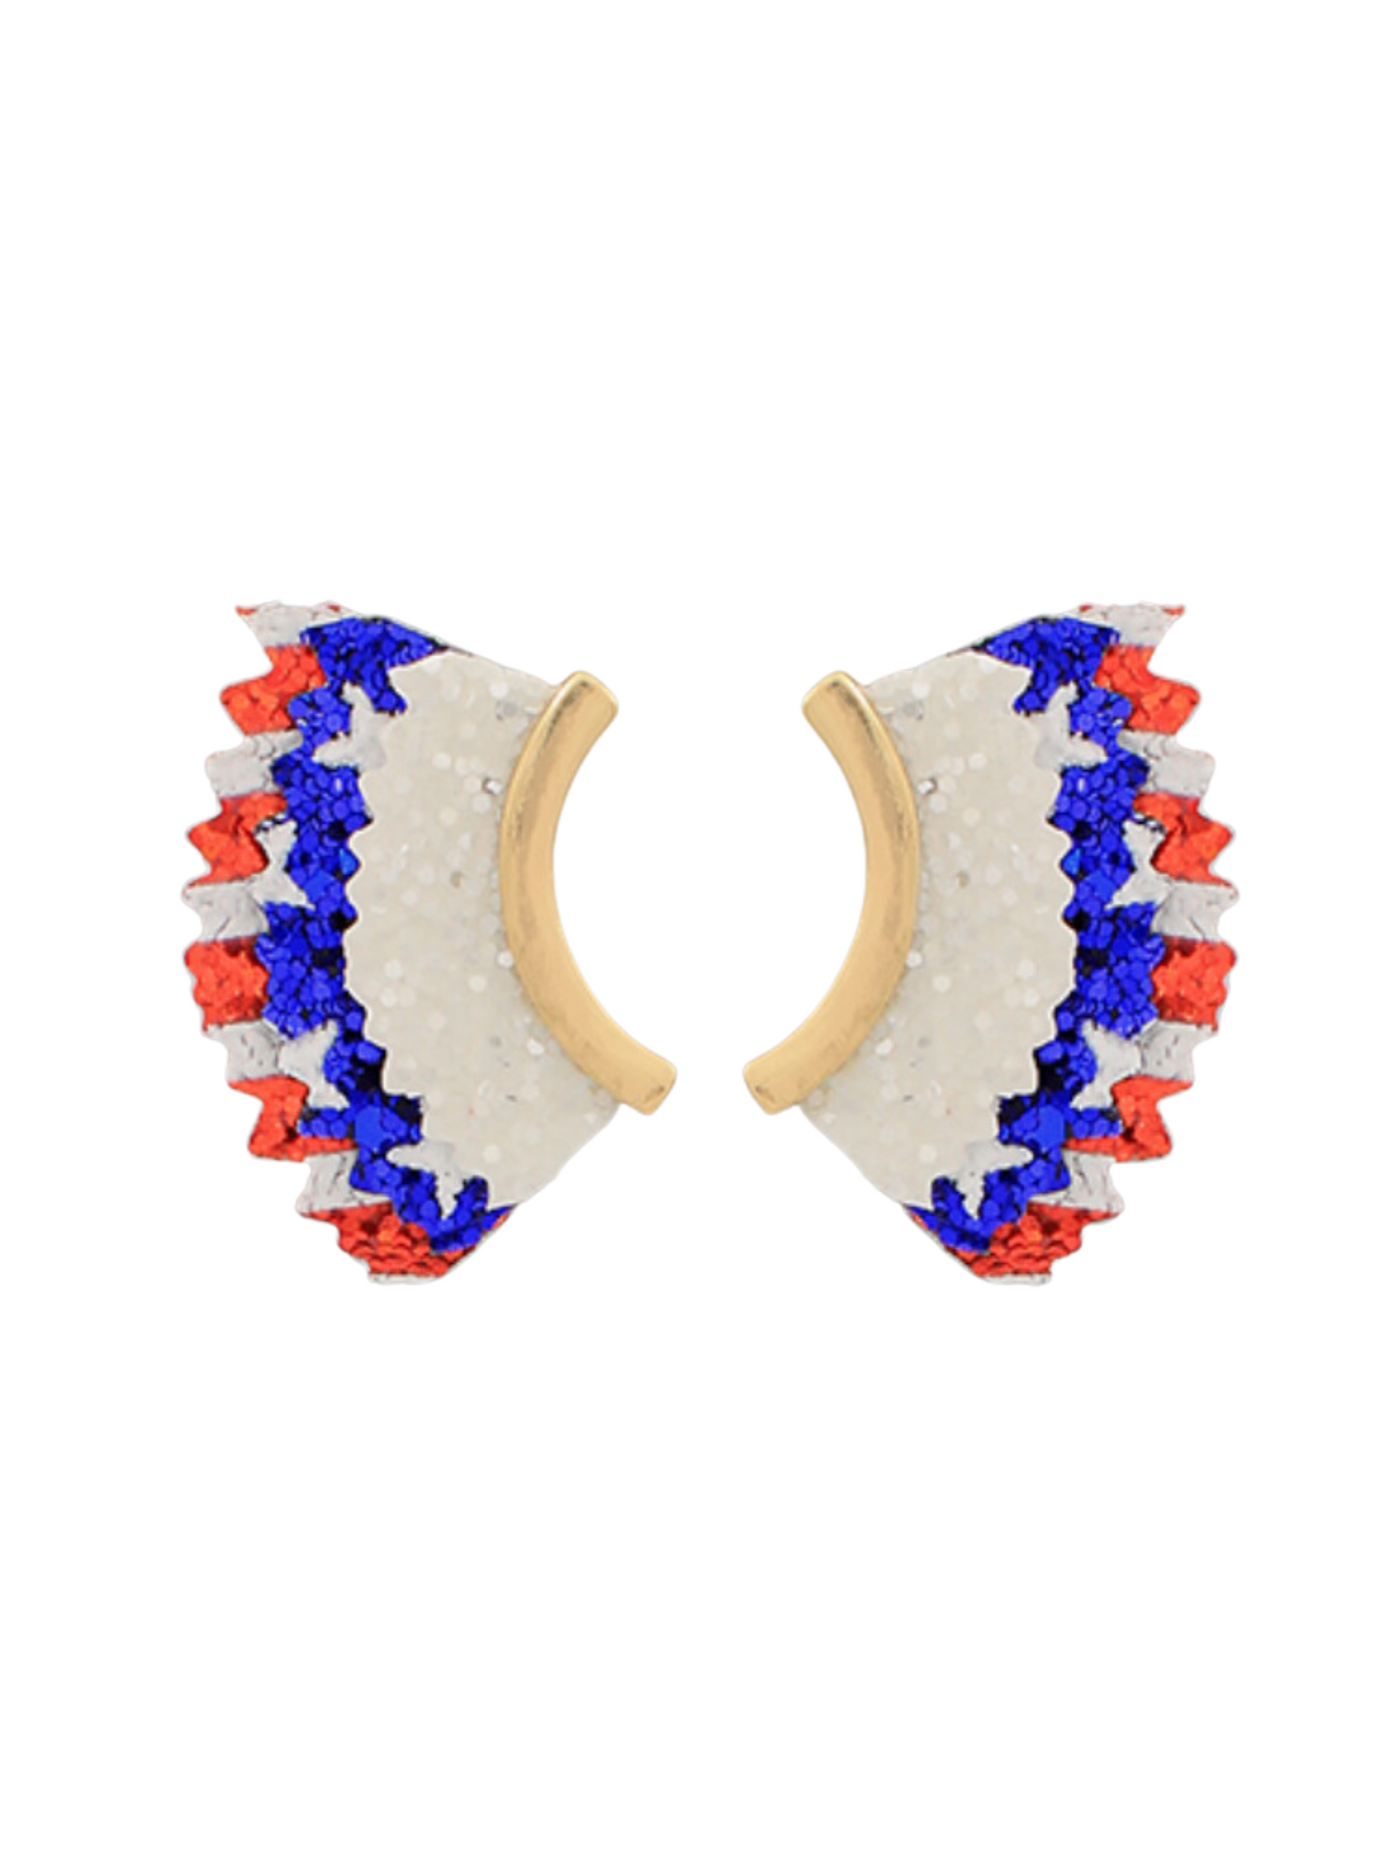 U.S.A Glitter Wing Earrings on white background.